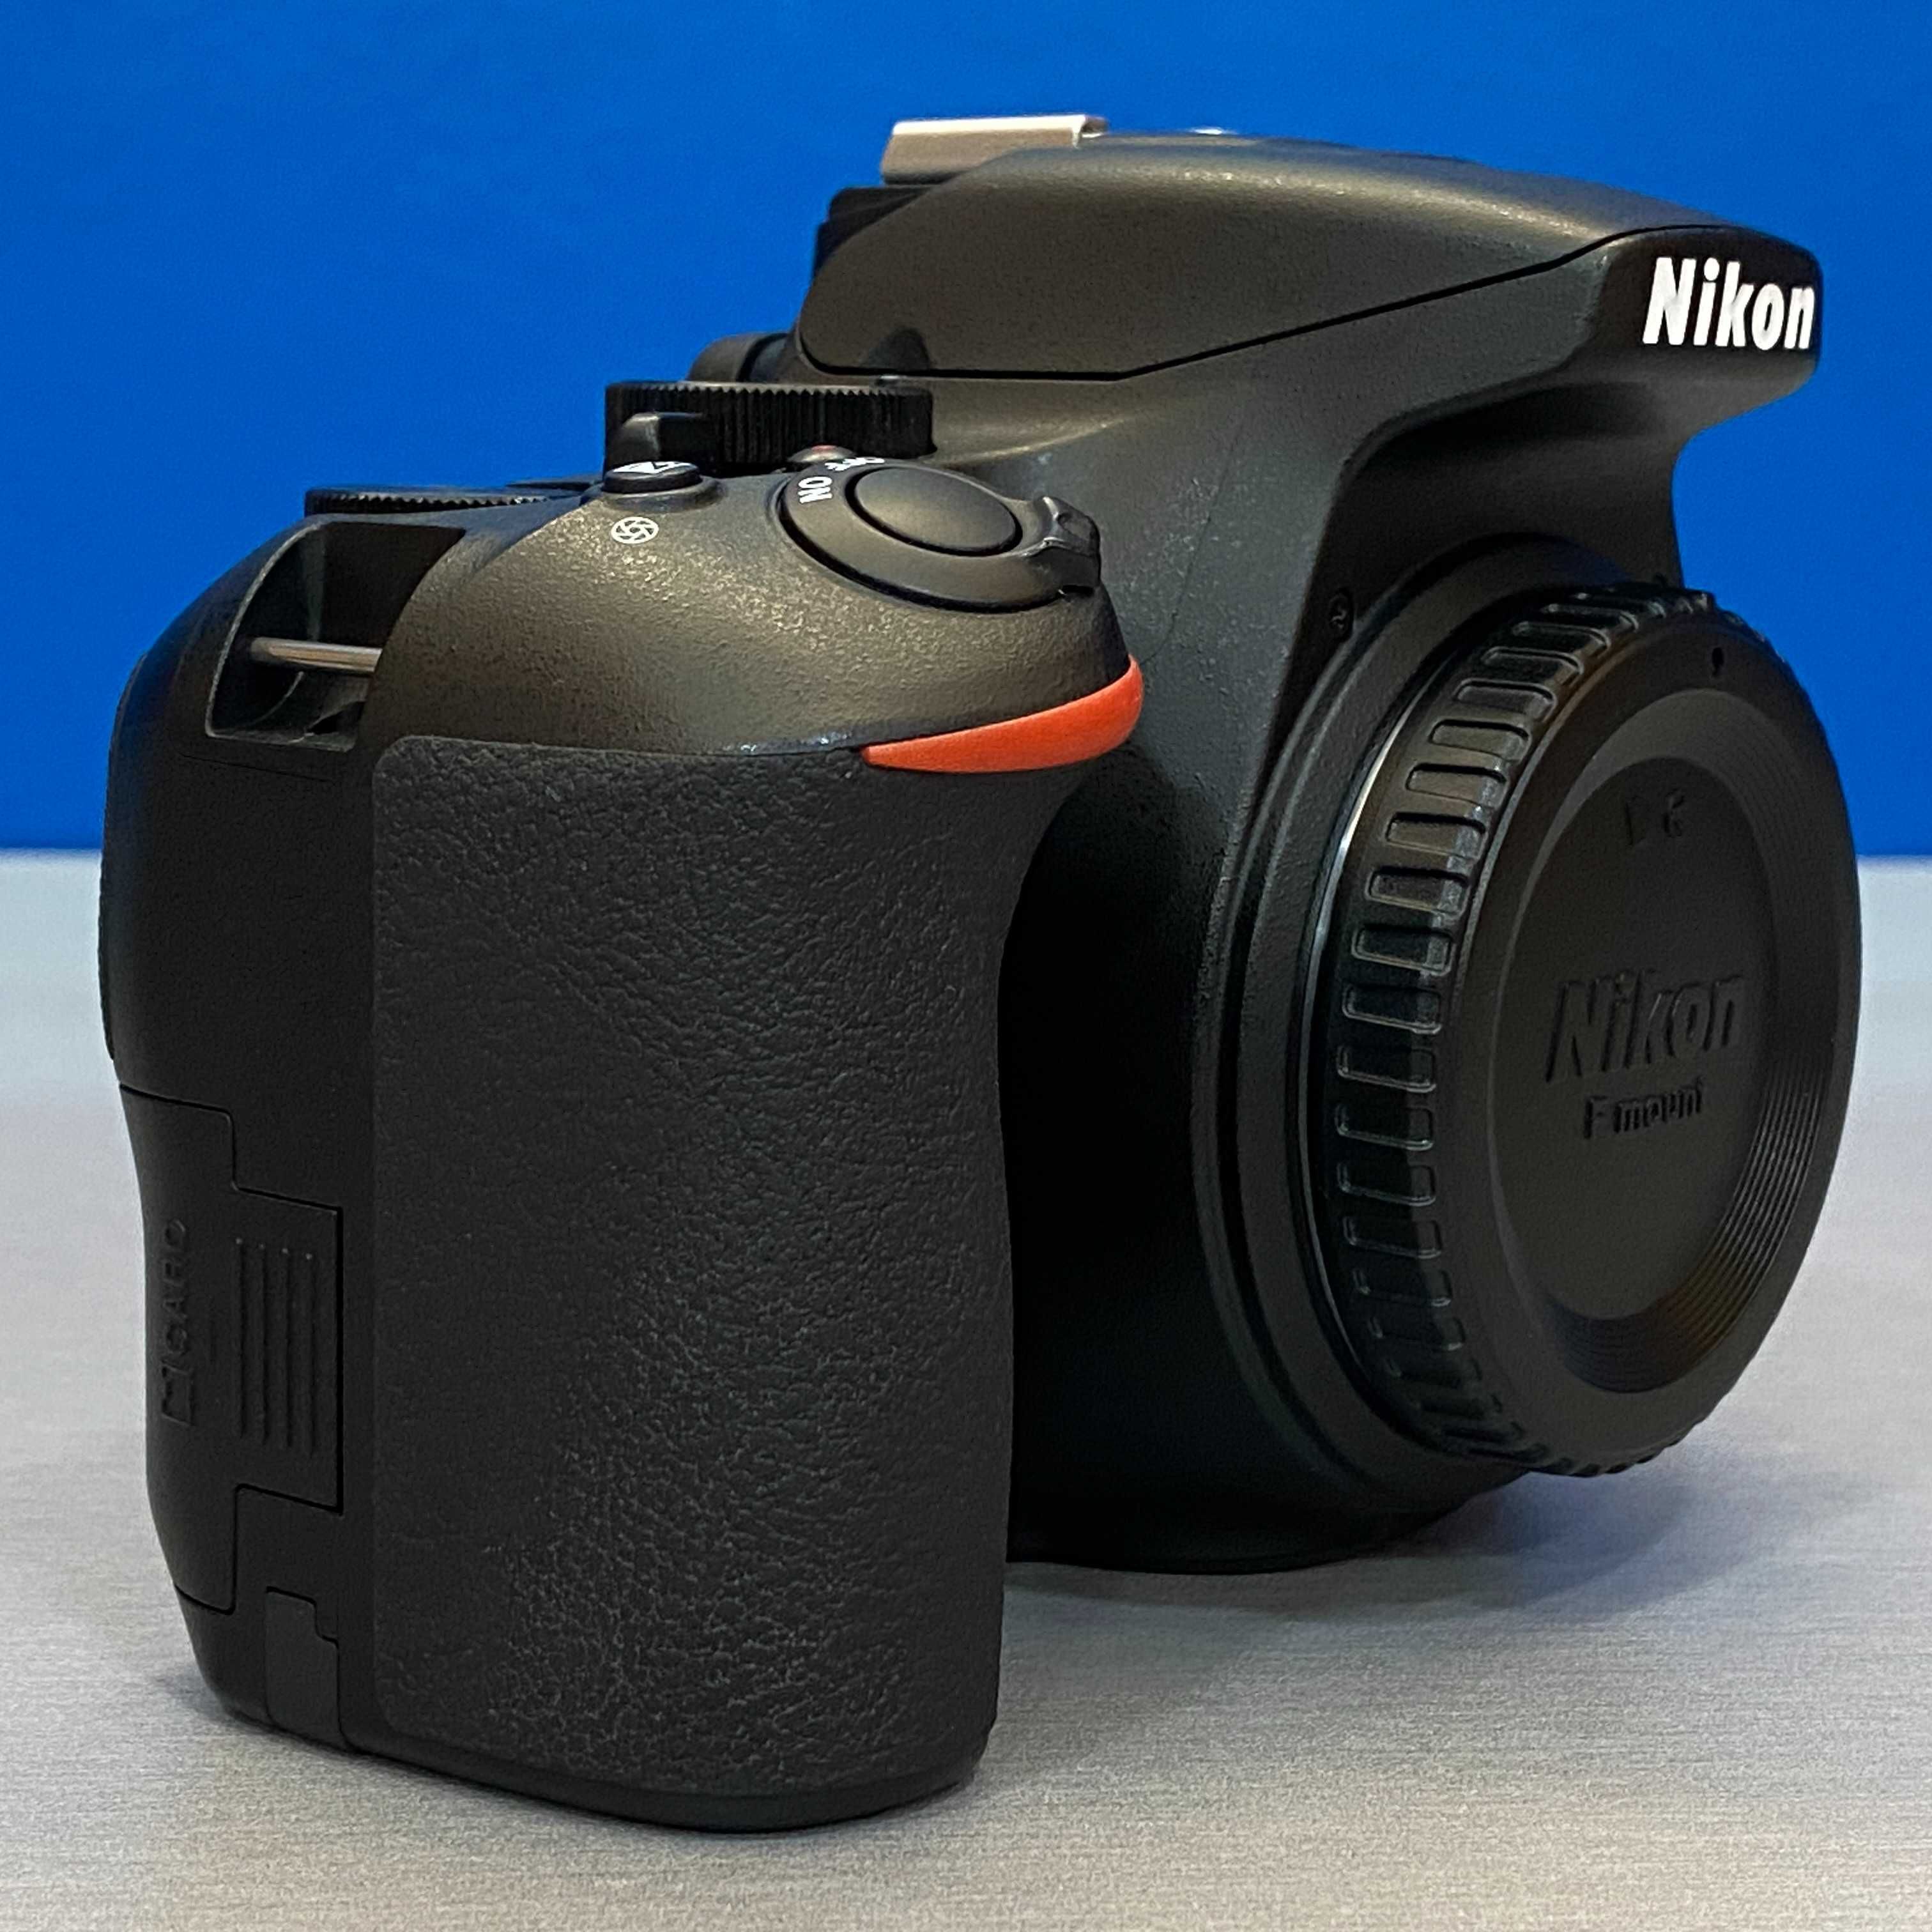 Nikon D3500 (Corpo) - 24.2MP